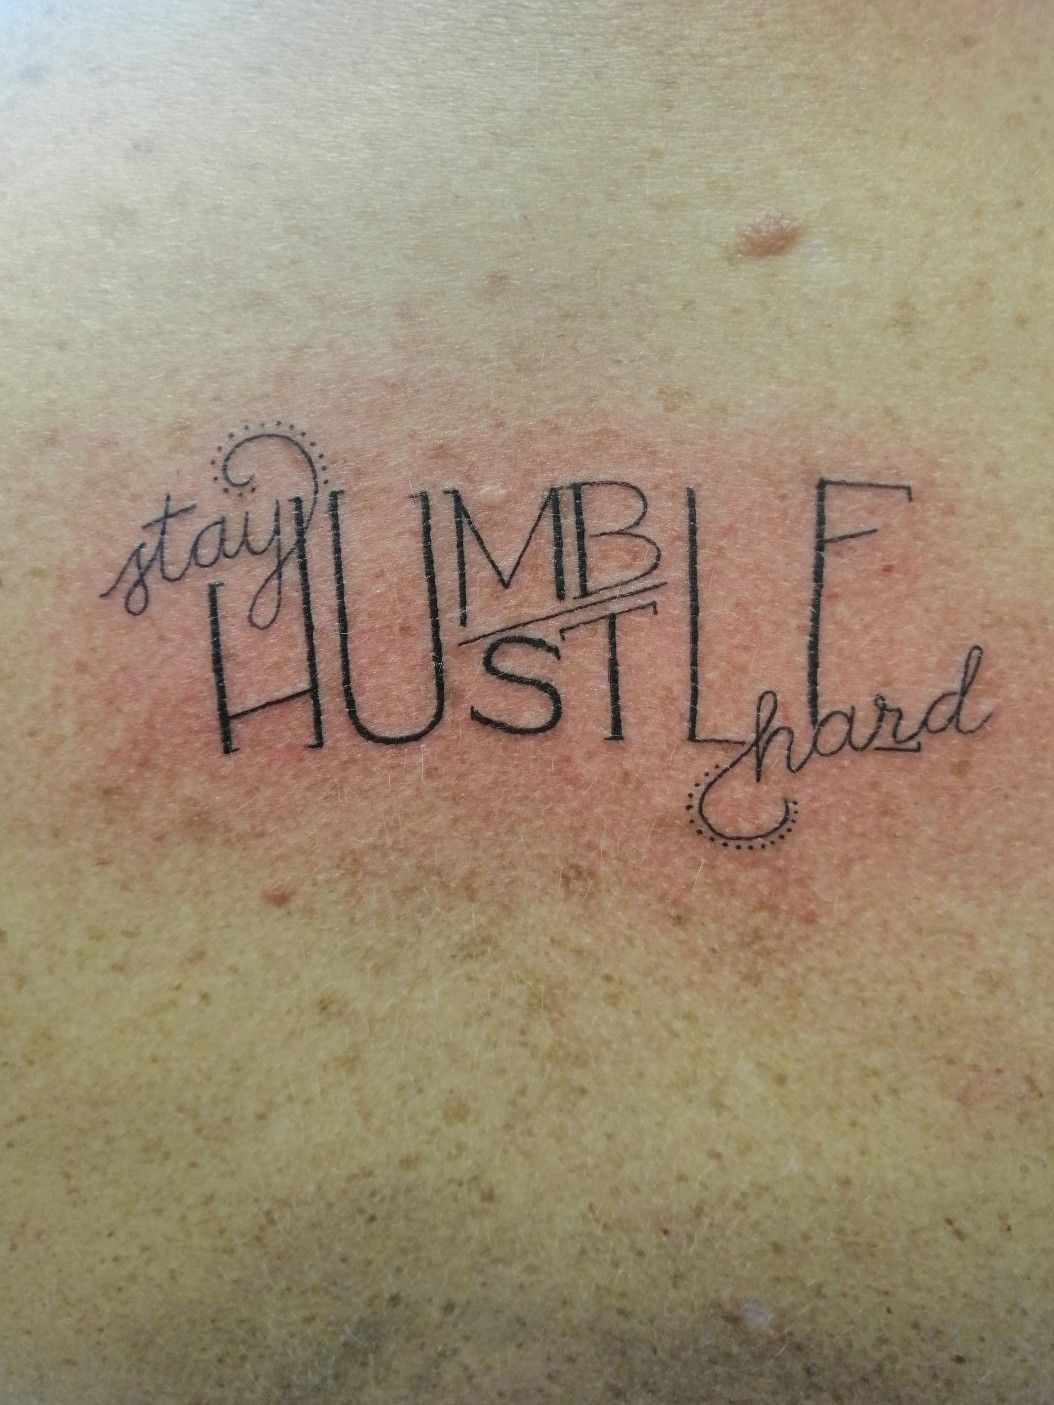 Stay Humble Hustle Hard Hustler Tattooed Diva Afro Stash of  Etsy